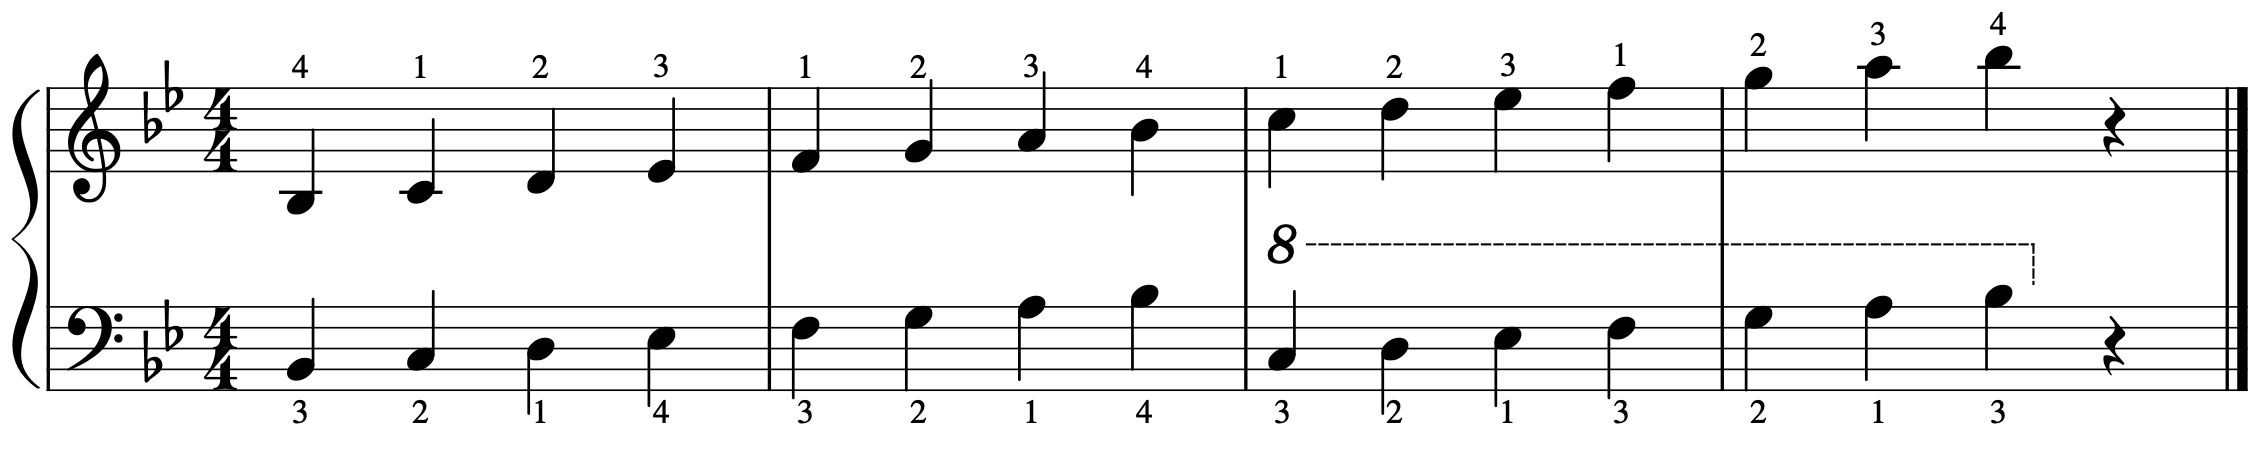 b flat major scale piano fingering